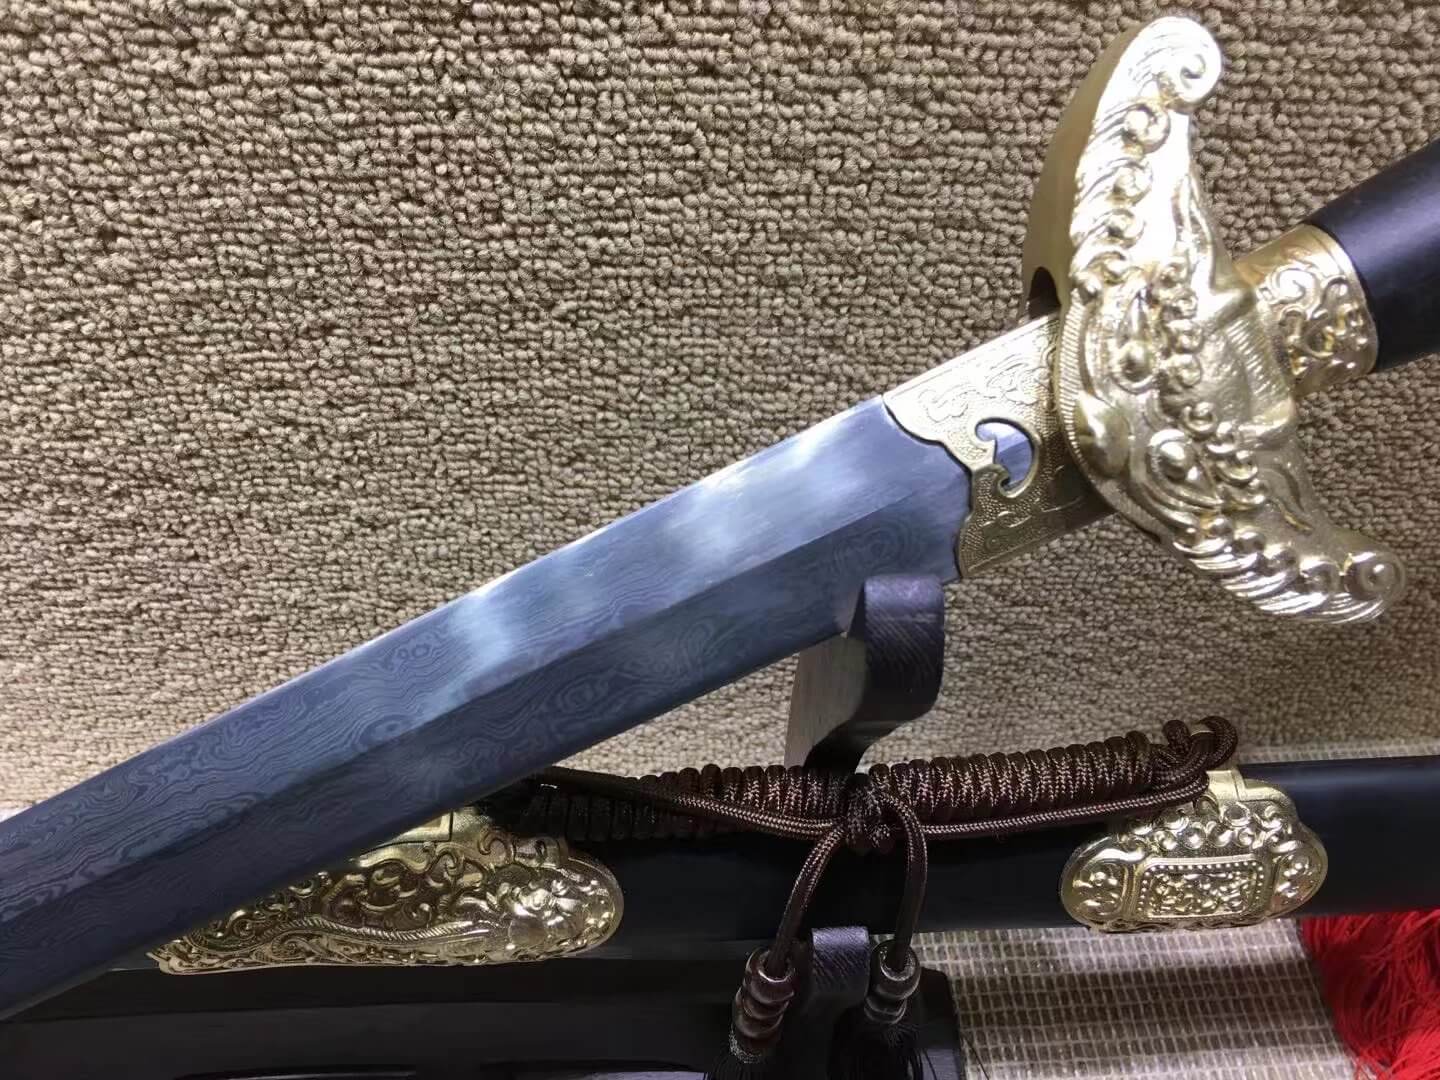 Qianlong jian,Damascus steel blade,Black scabbard,Brass fittings - Chinese sword shop